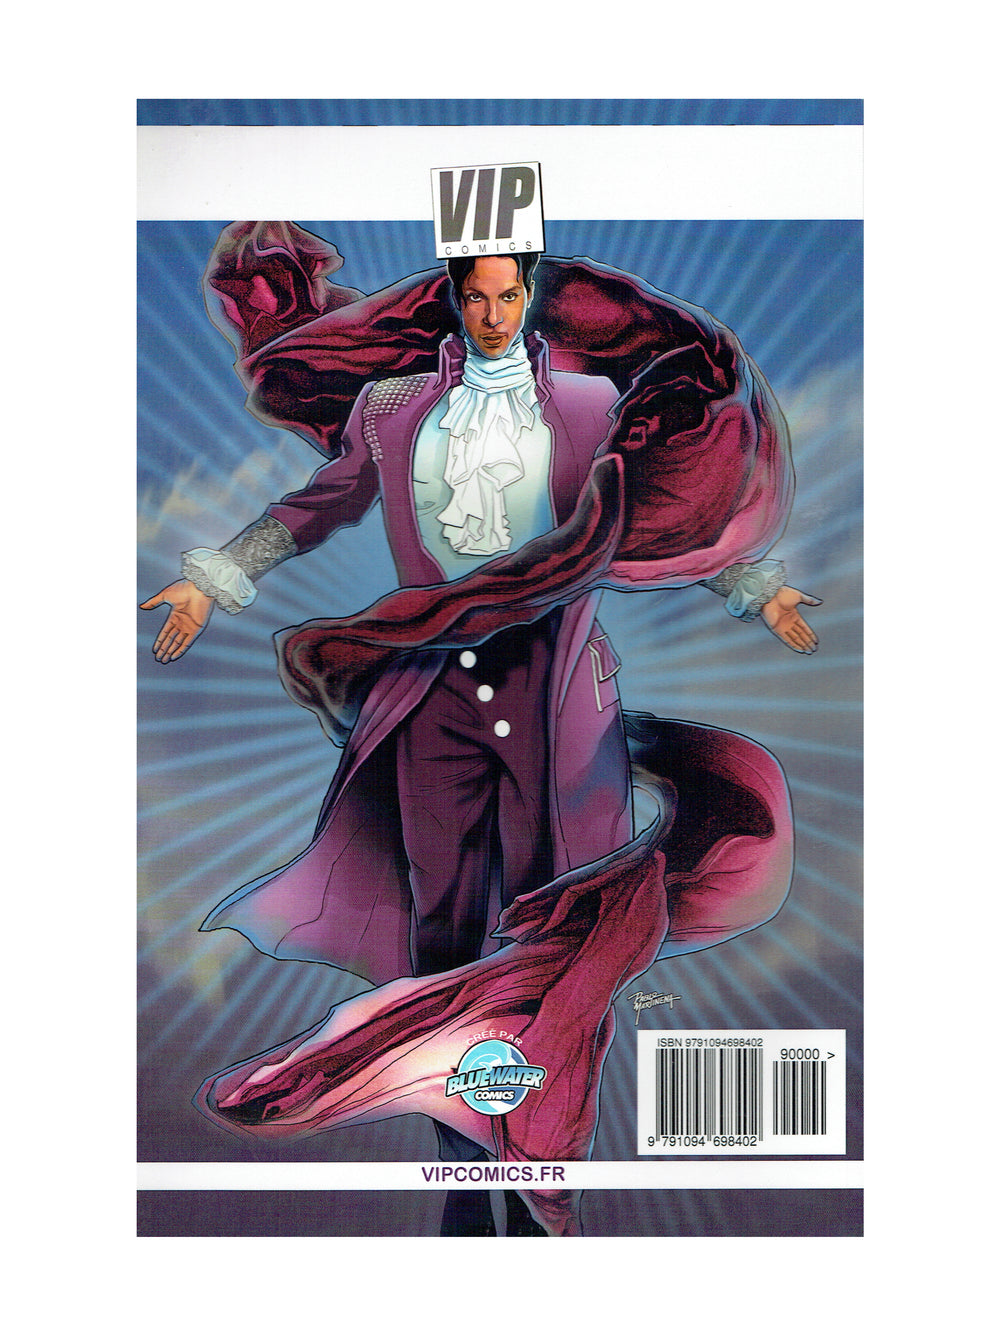 Prince Fame Tribute Magazine Graphic Novel VIPCOMICS FR